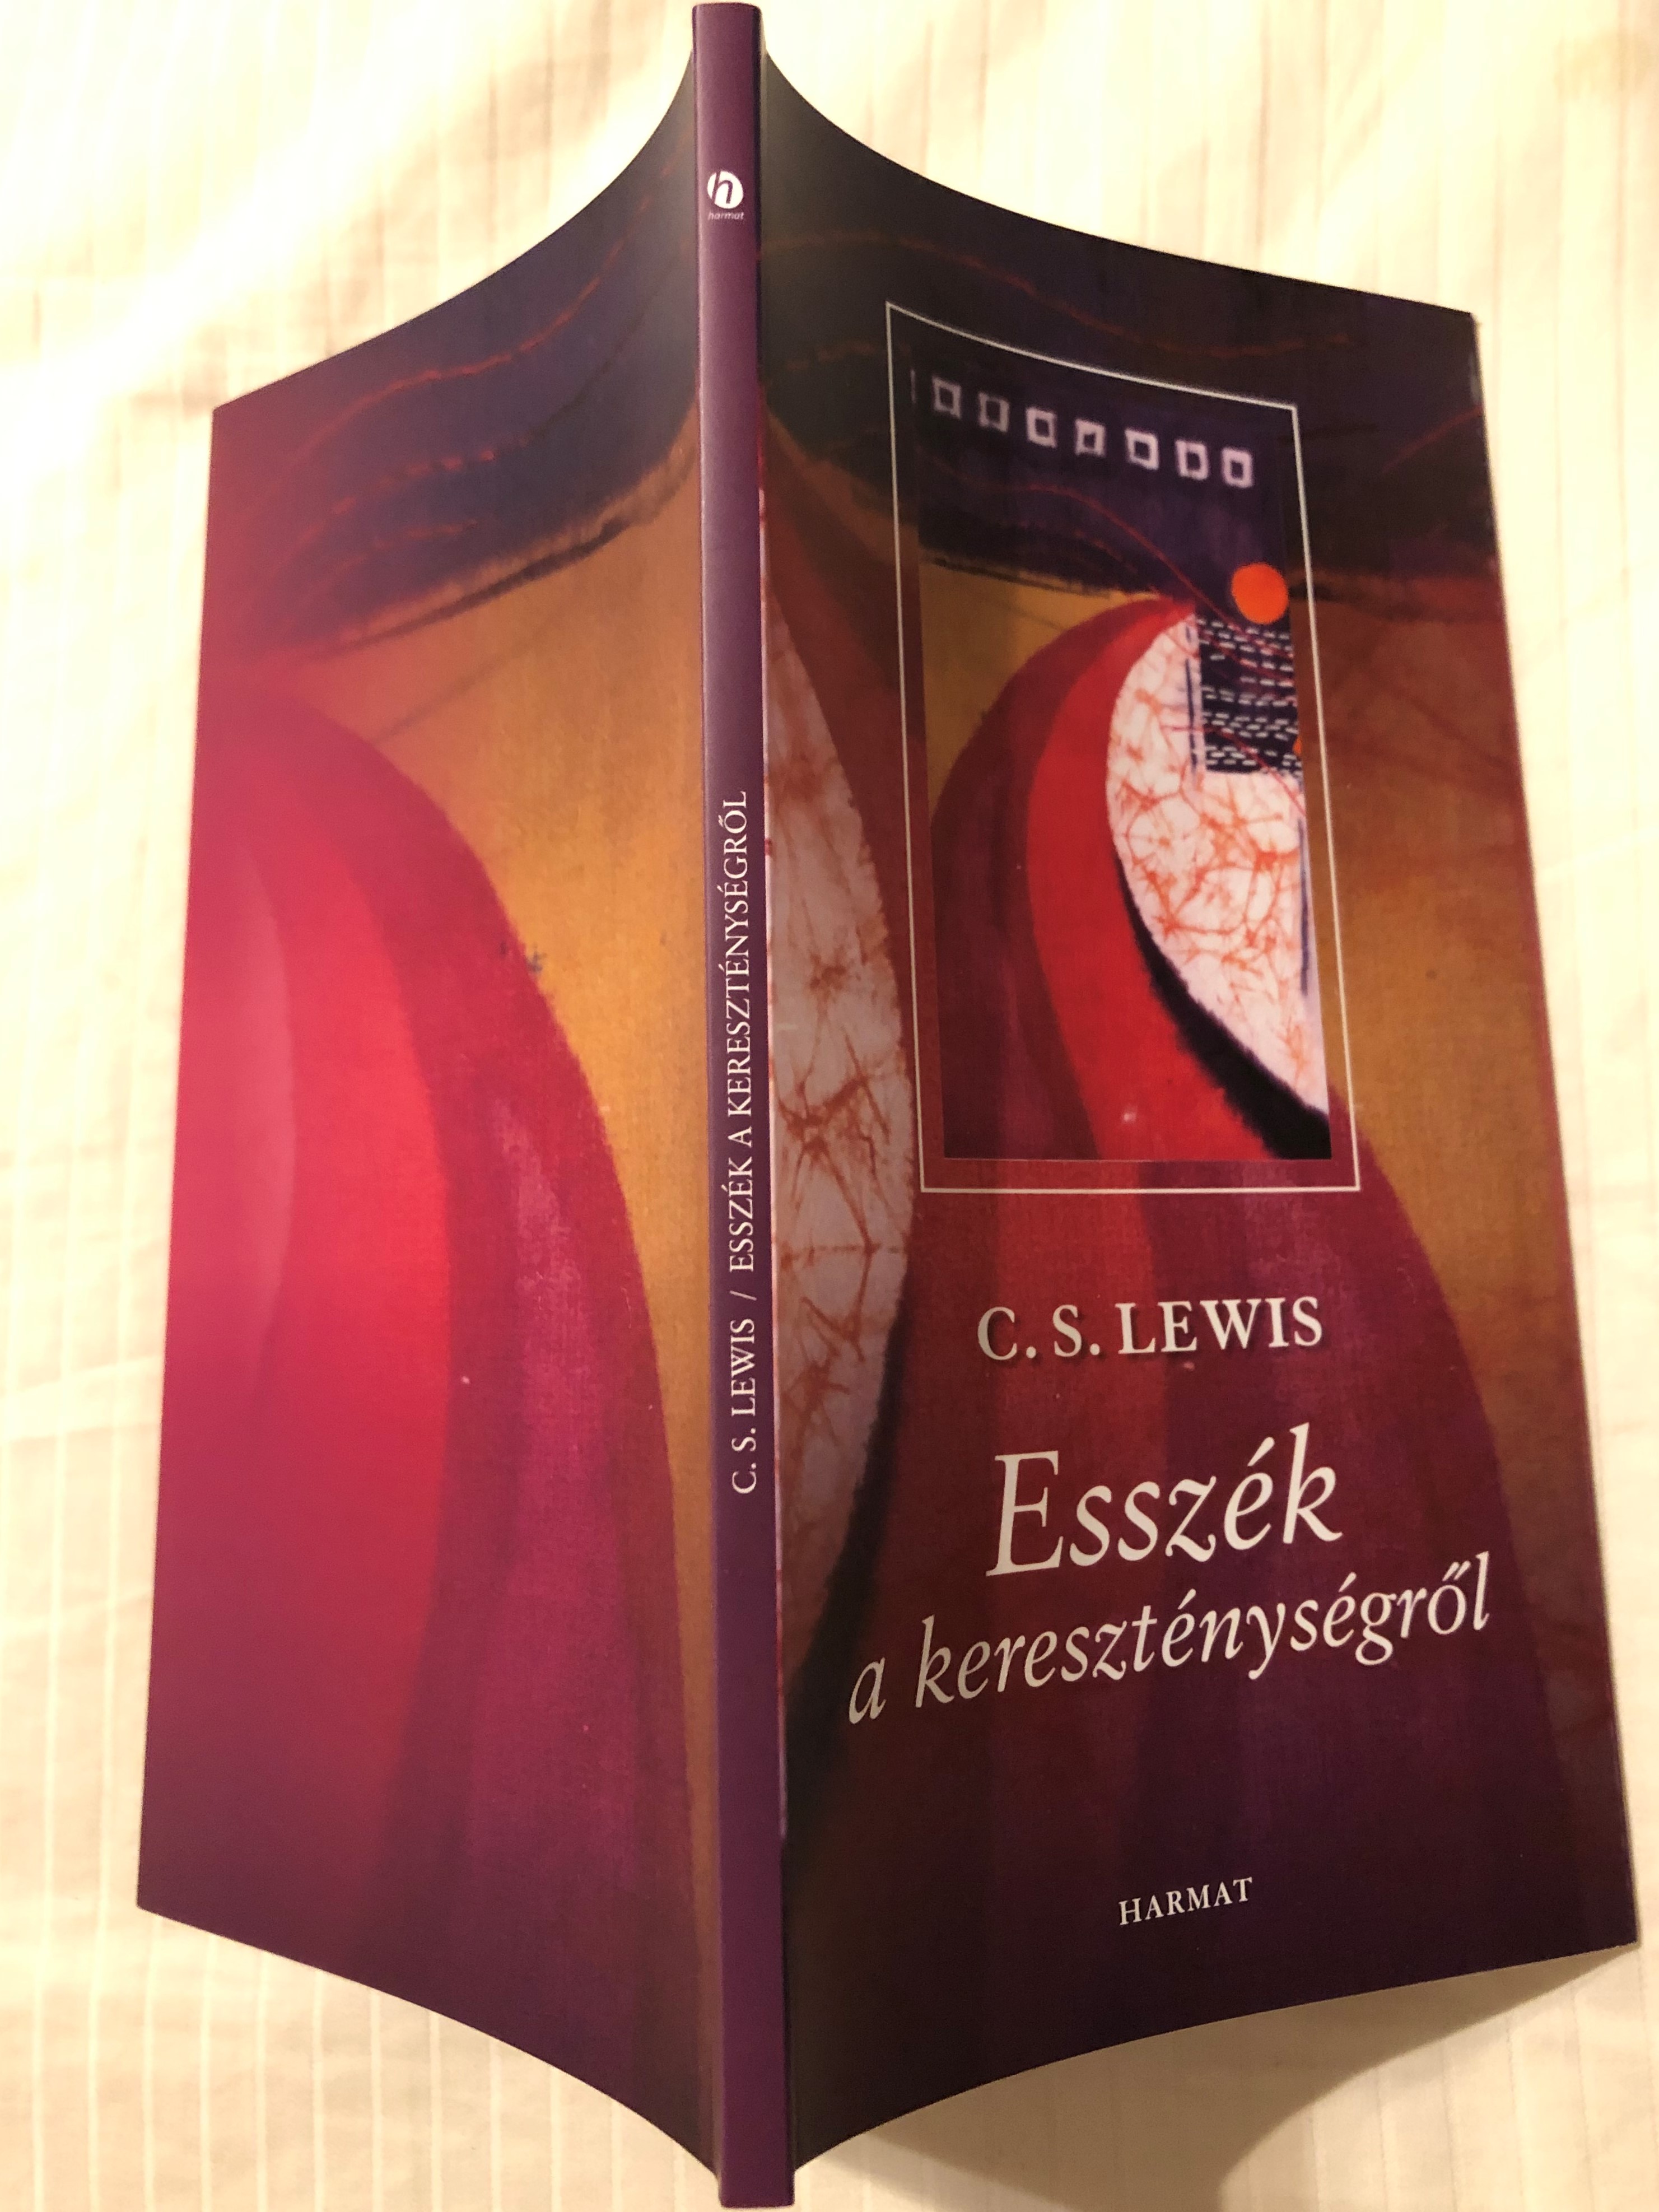 essz-k-a-kereszt-nys-gr-l-by-c.-s.-lewis-hungarian-translation-of-essay-collection-10.jpg